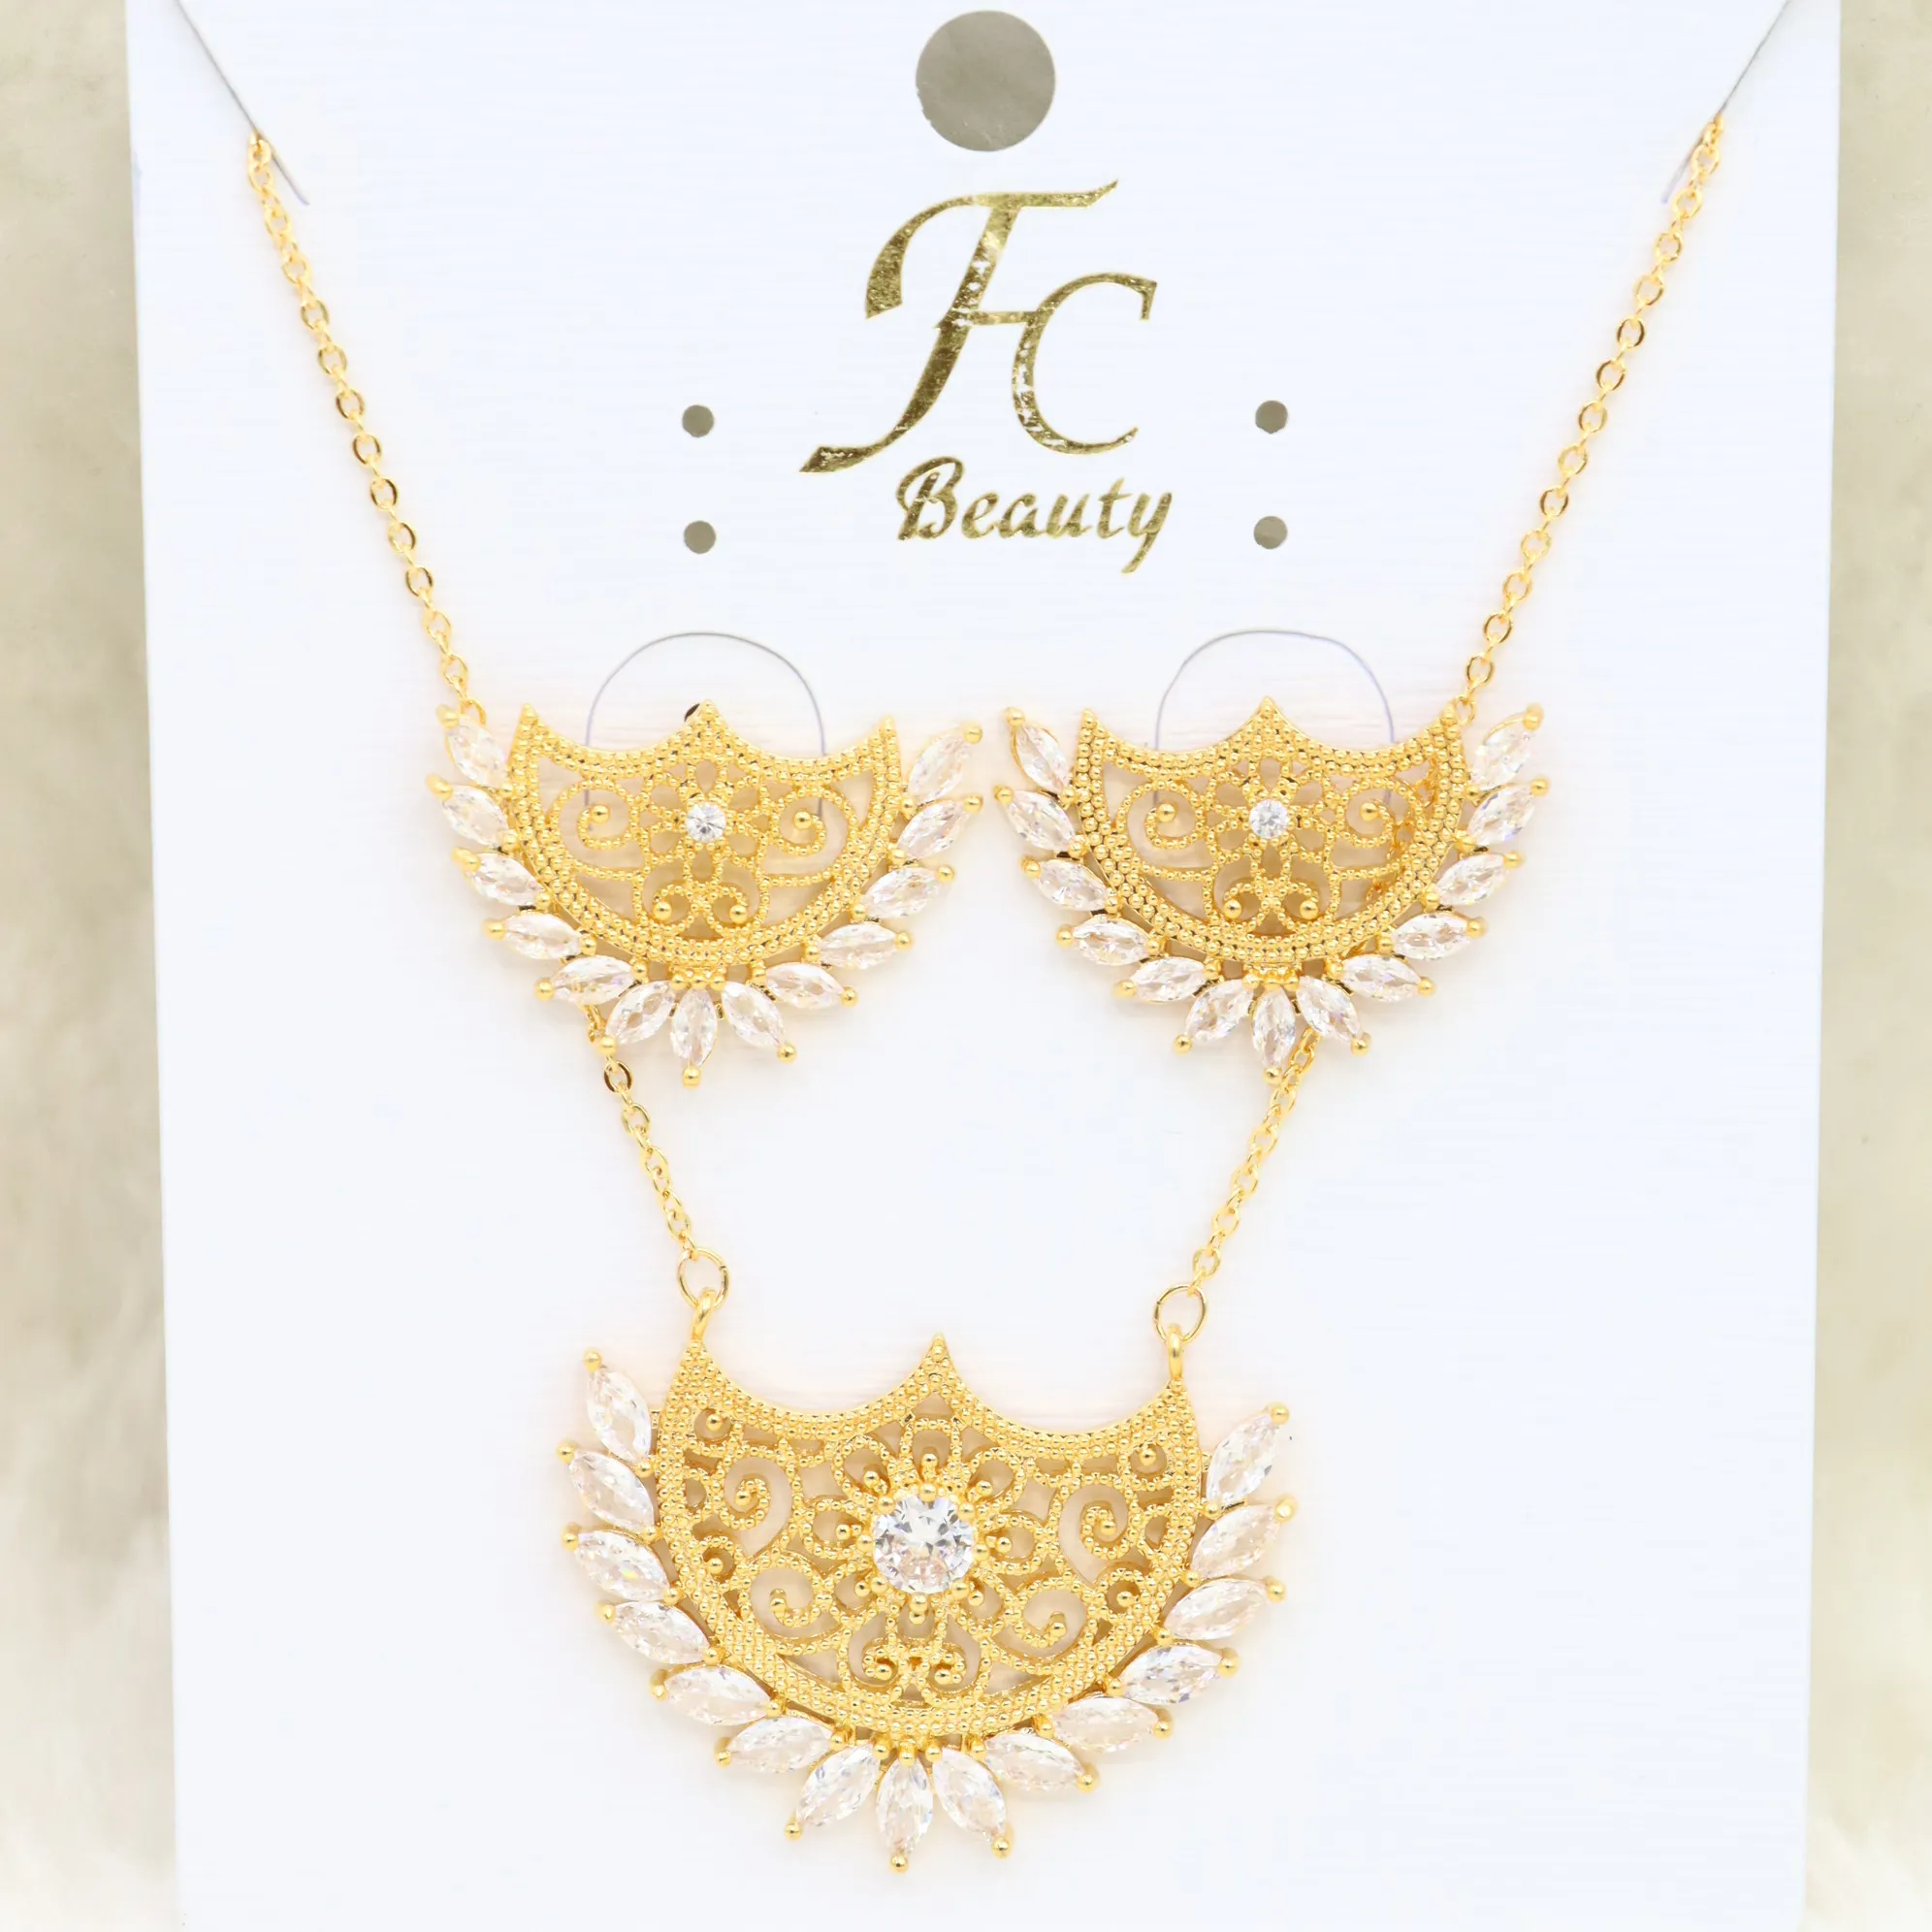 Fashion Pendant Chain Jewelry Necklace Fashion Wedding Accessories Jewelry Set Cubic Zirconia Women Gift Gold Zircon